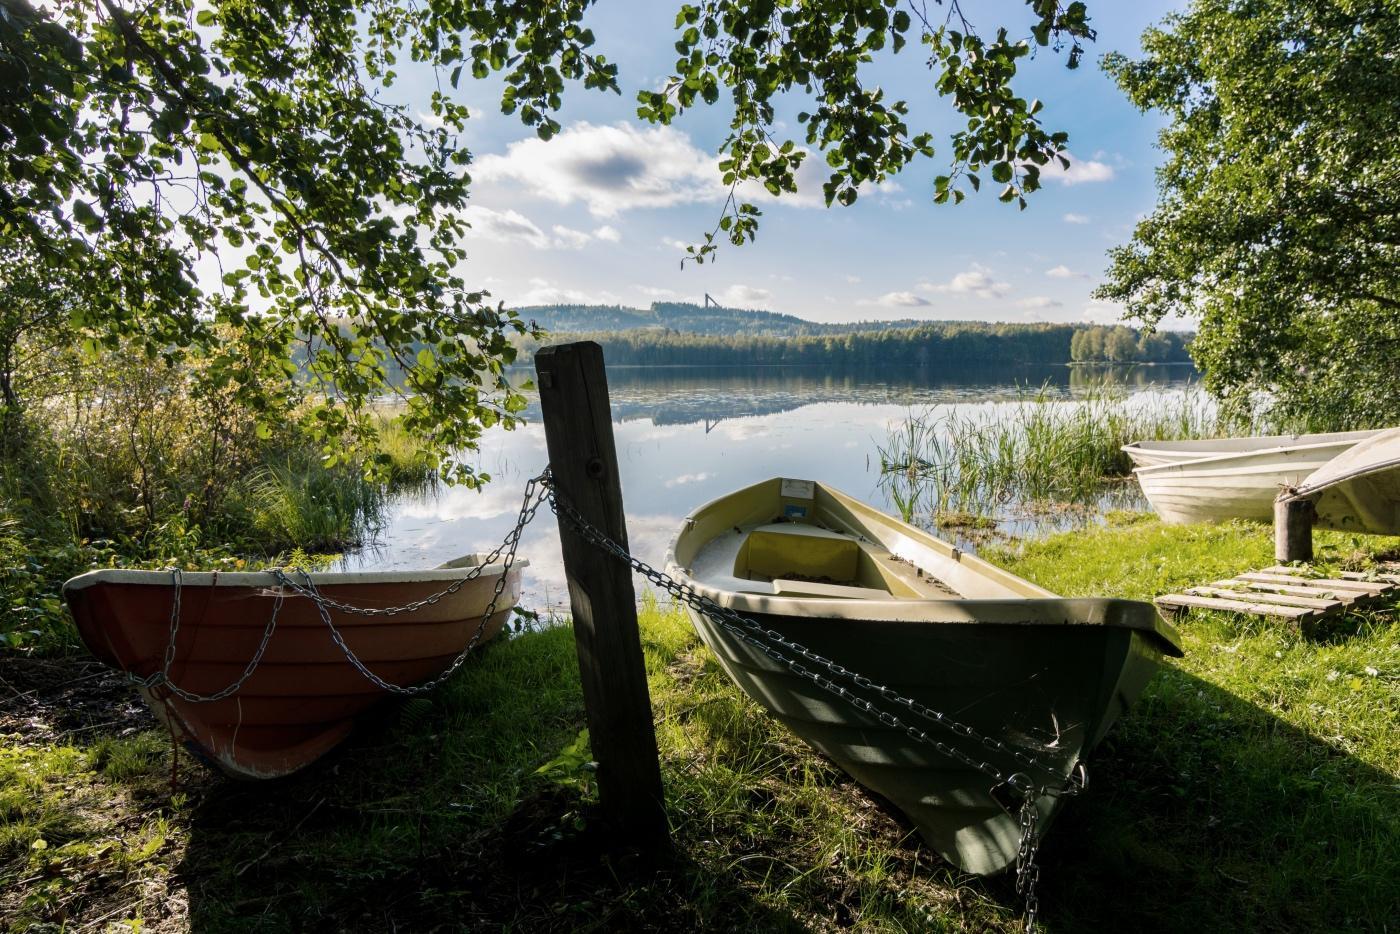 In Lakeland Jyväskylä you can take a boat trip, photo Atacan Ergin